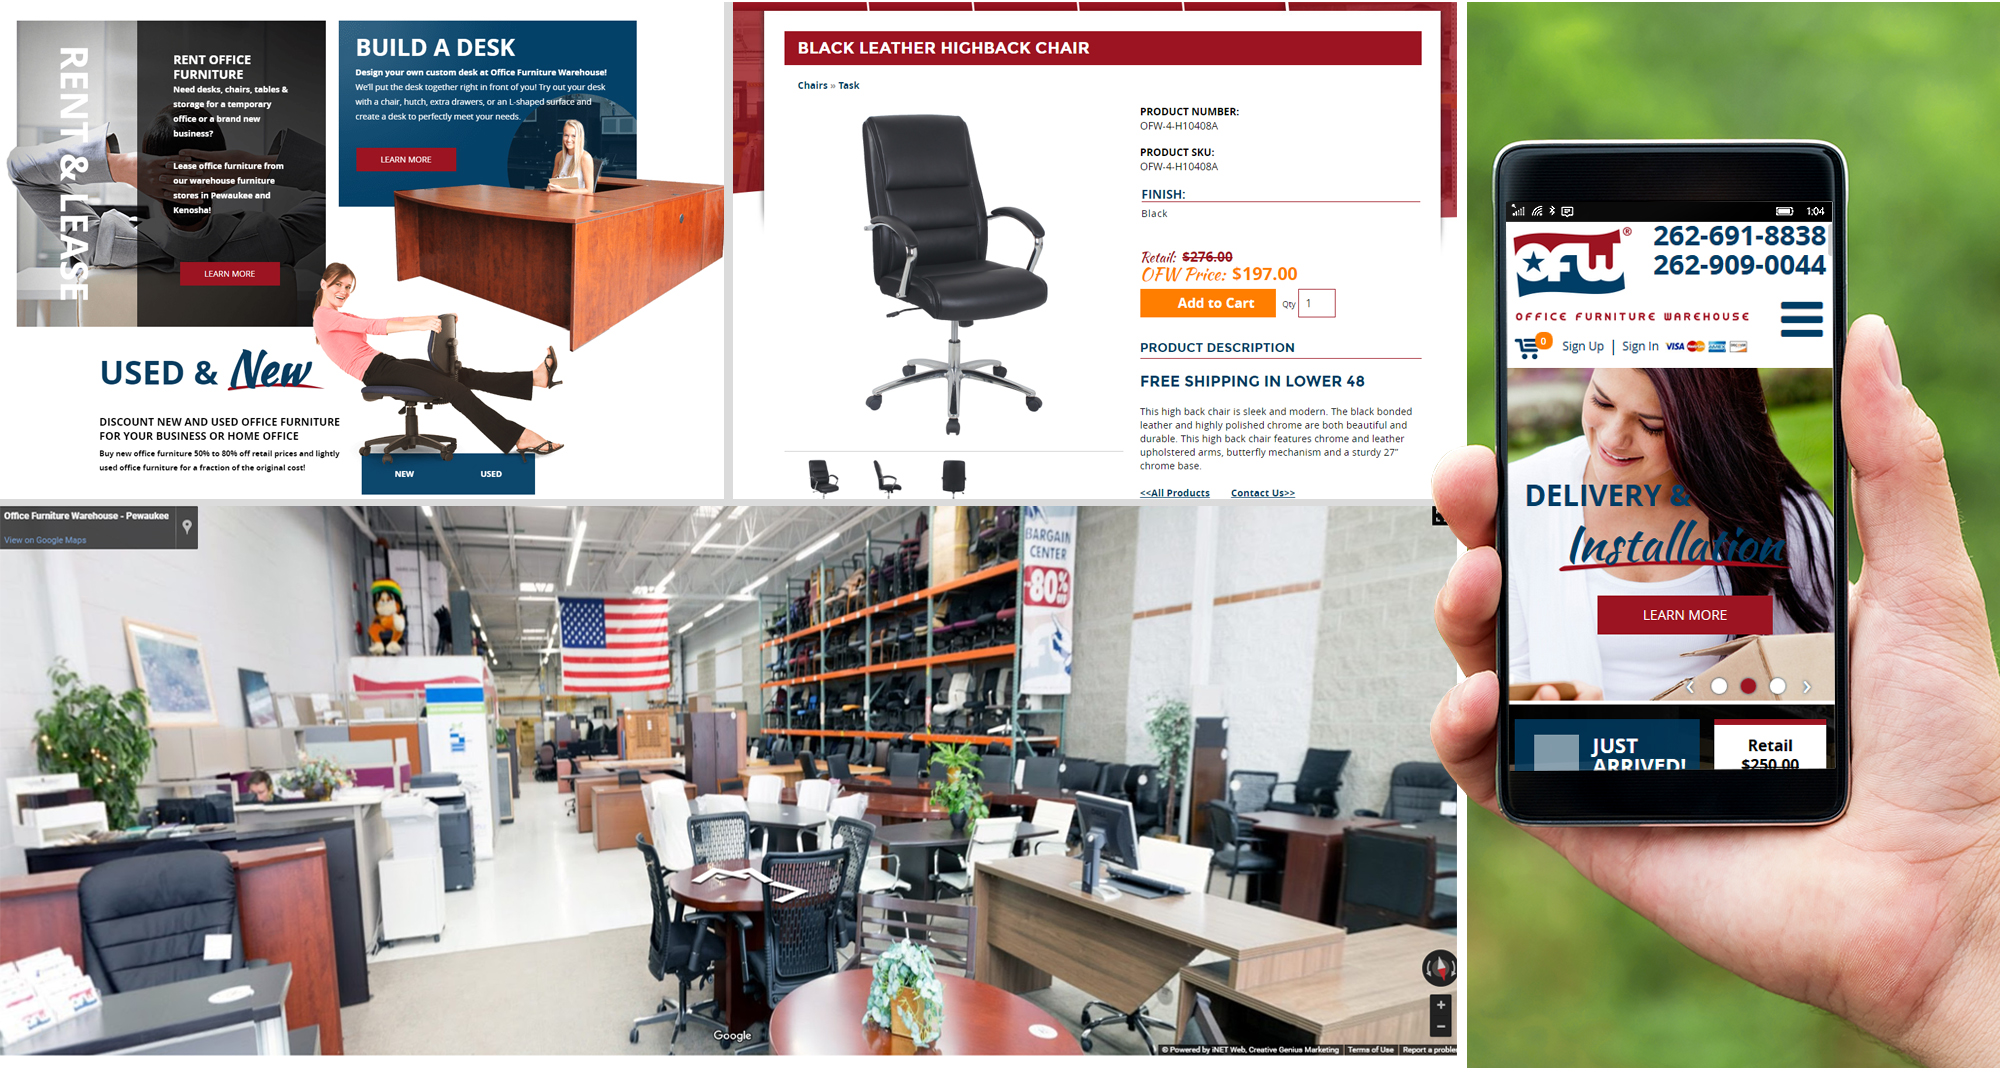 Milwaukee web marketing for Office Furniture Warehouse